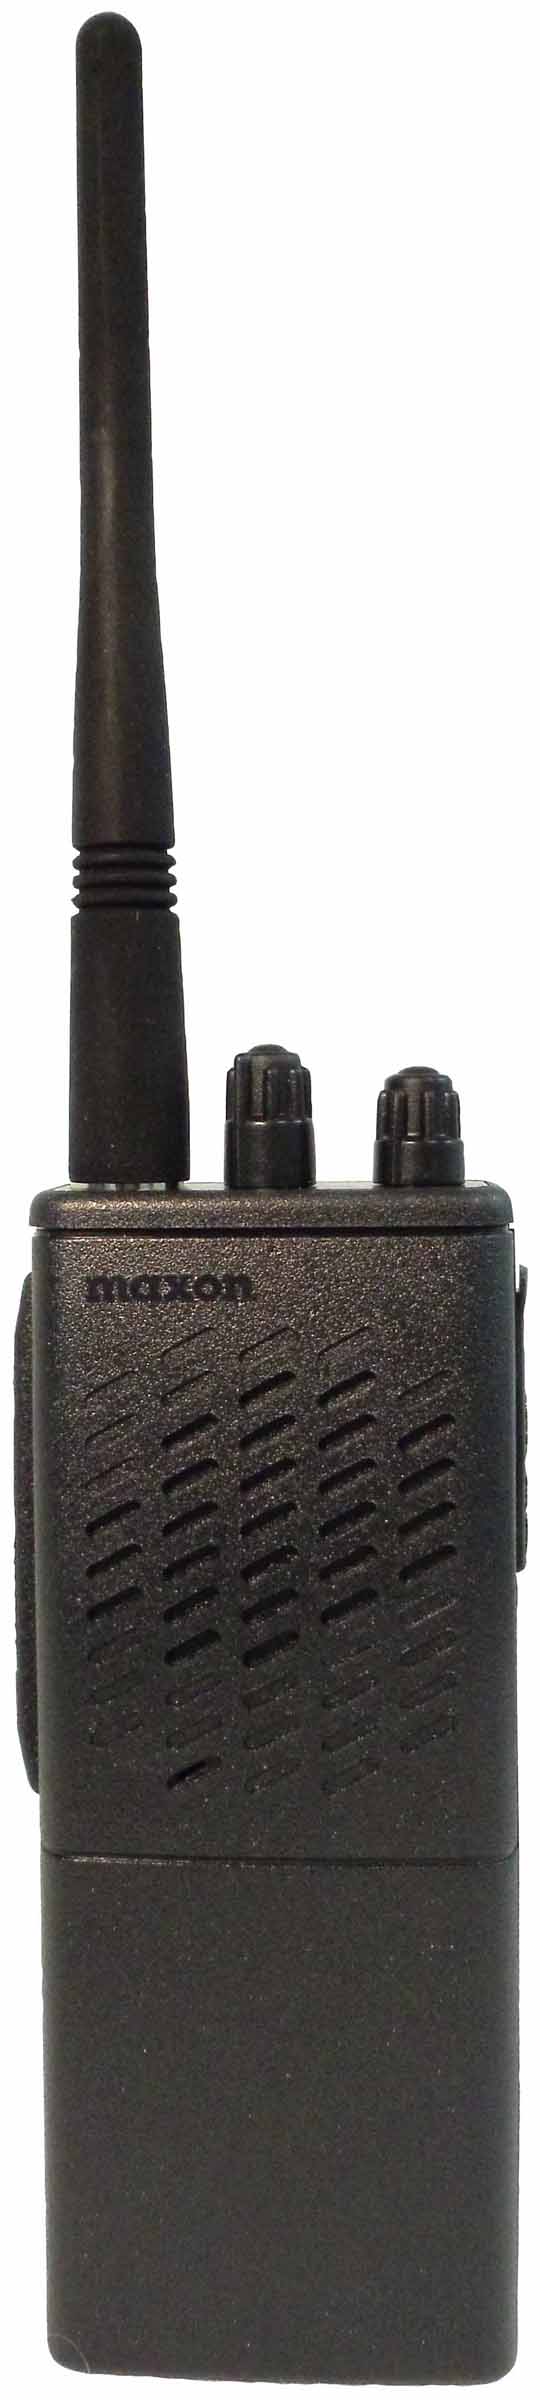 MAXON VHF 2 WATTS/4 CHANNELS RADIO